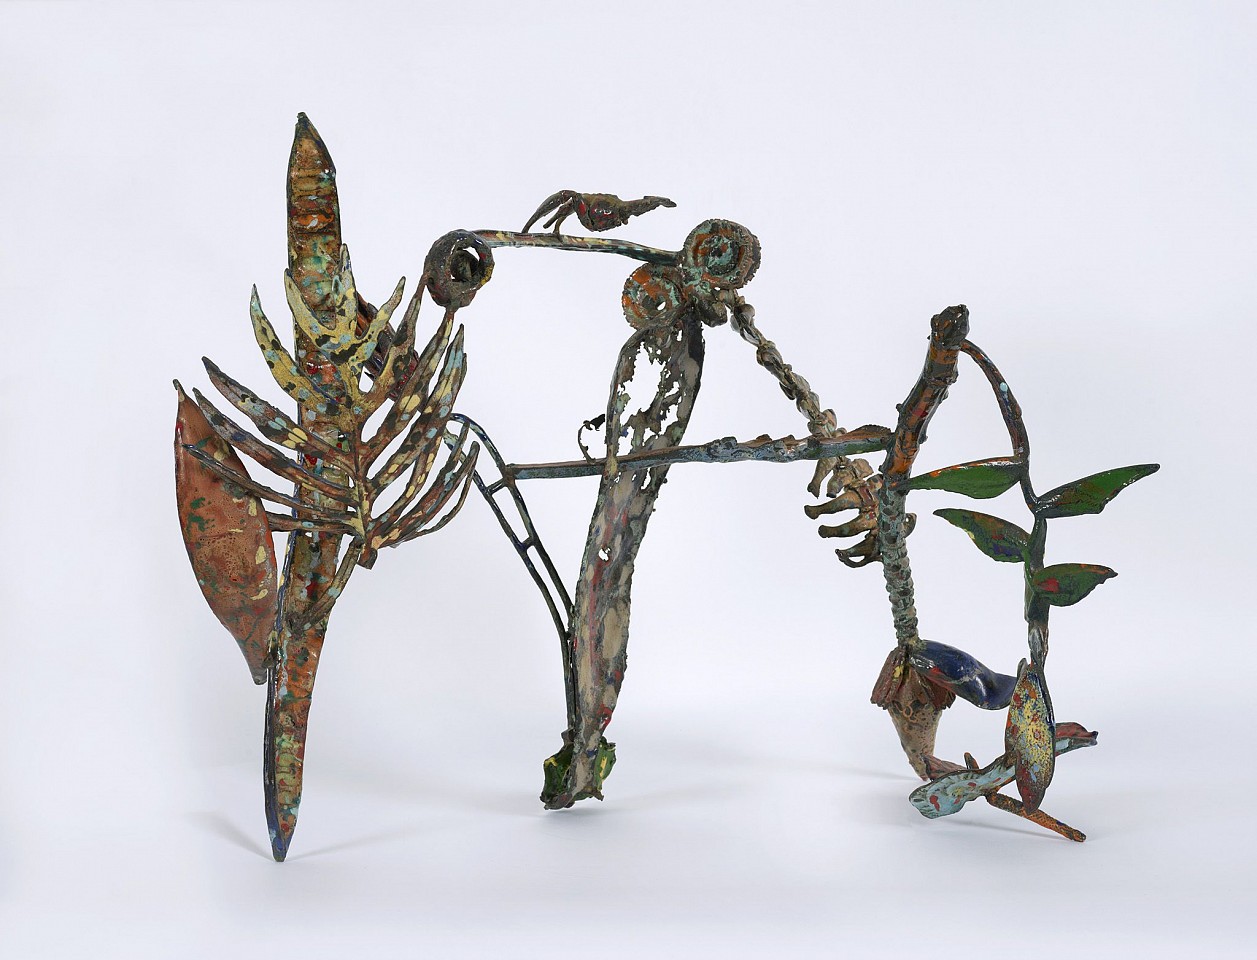 Nancy Graves, Landed (Glass Series), 1983
Baked enamel on bronze, 22 1/4 x 28 x 13 in. (56.5 x 71.1 x 33 cm)
GRA-00008